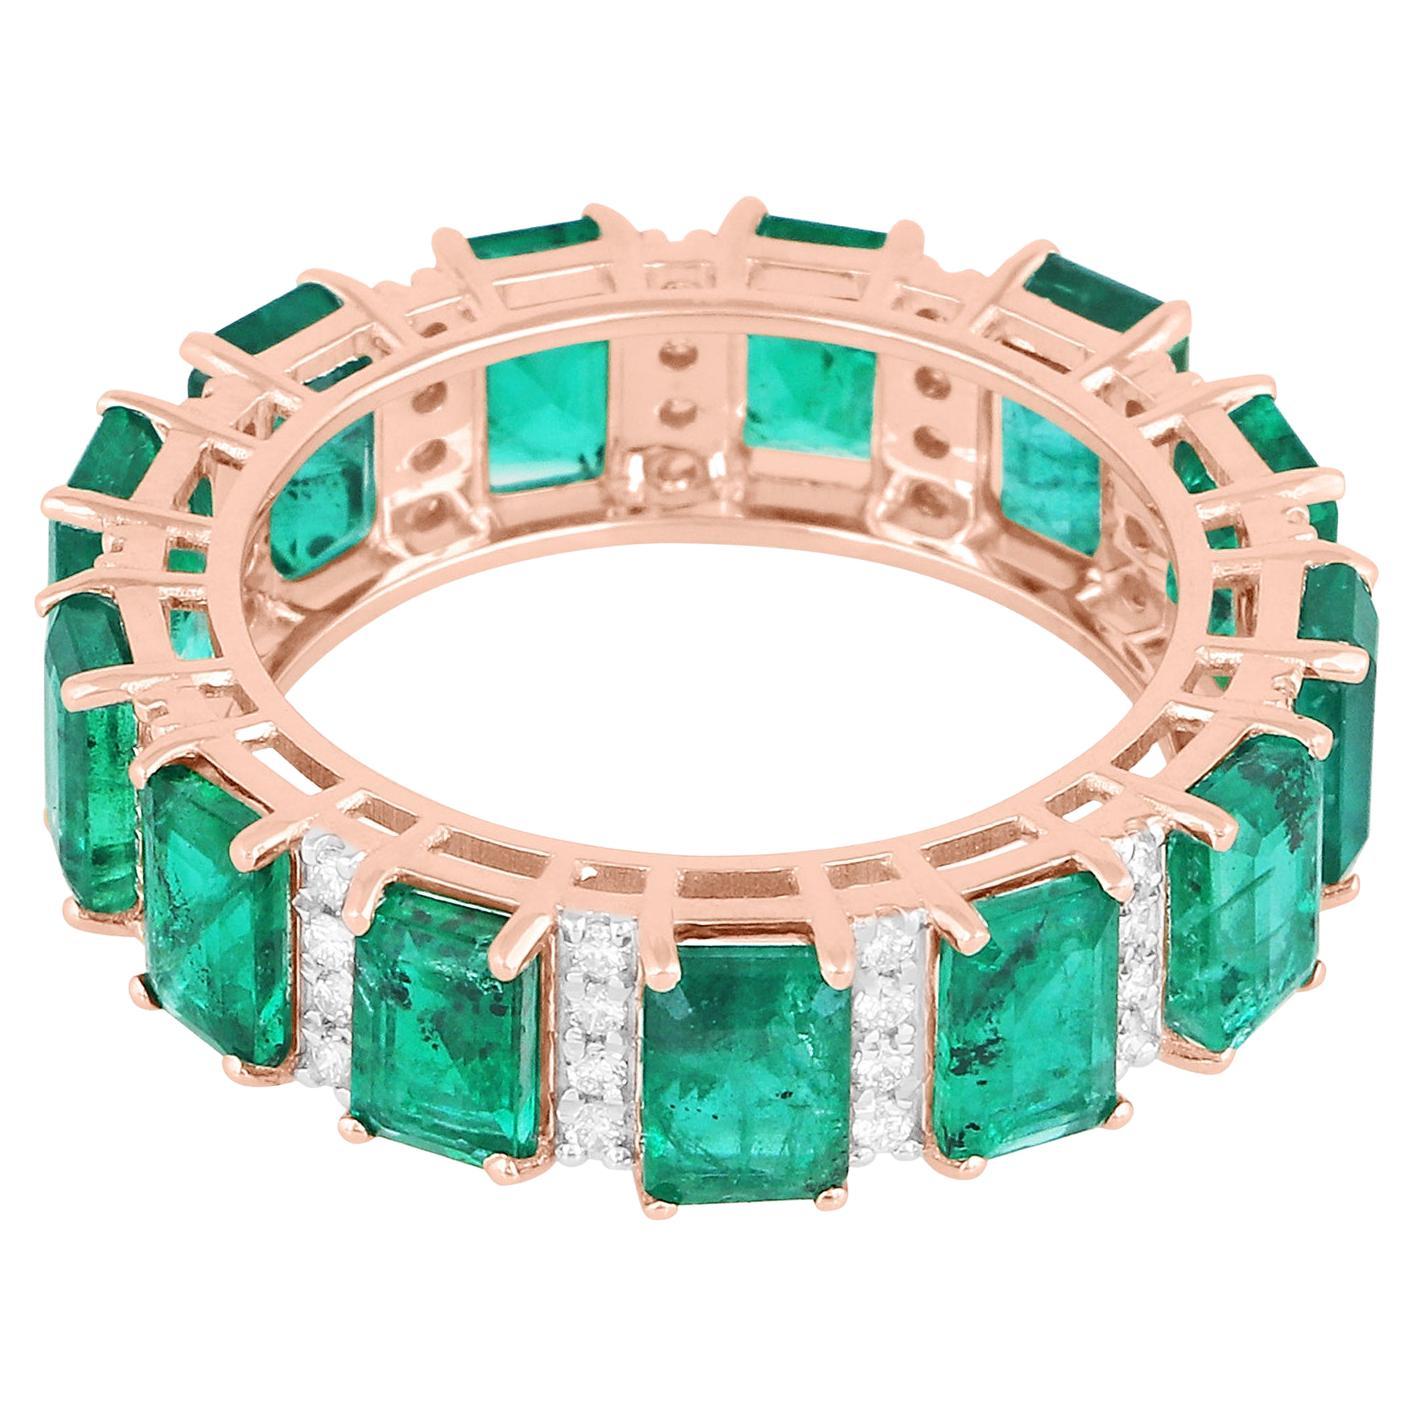 Zambianischer Smaragd-Edelstein-Ring aus 18 Karat Roségold, handgefertigter Schmuck